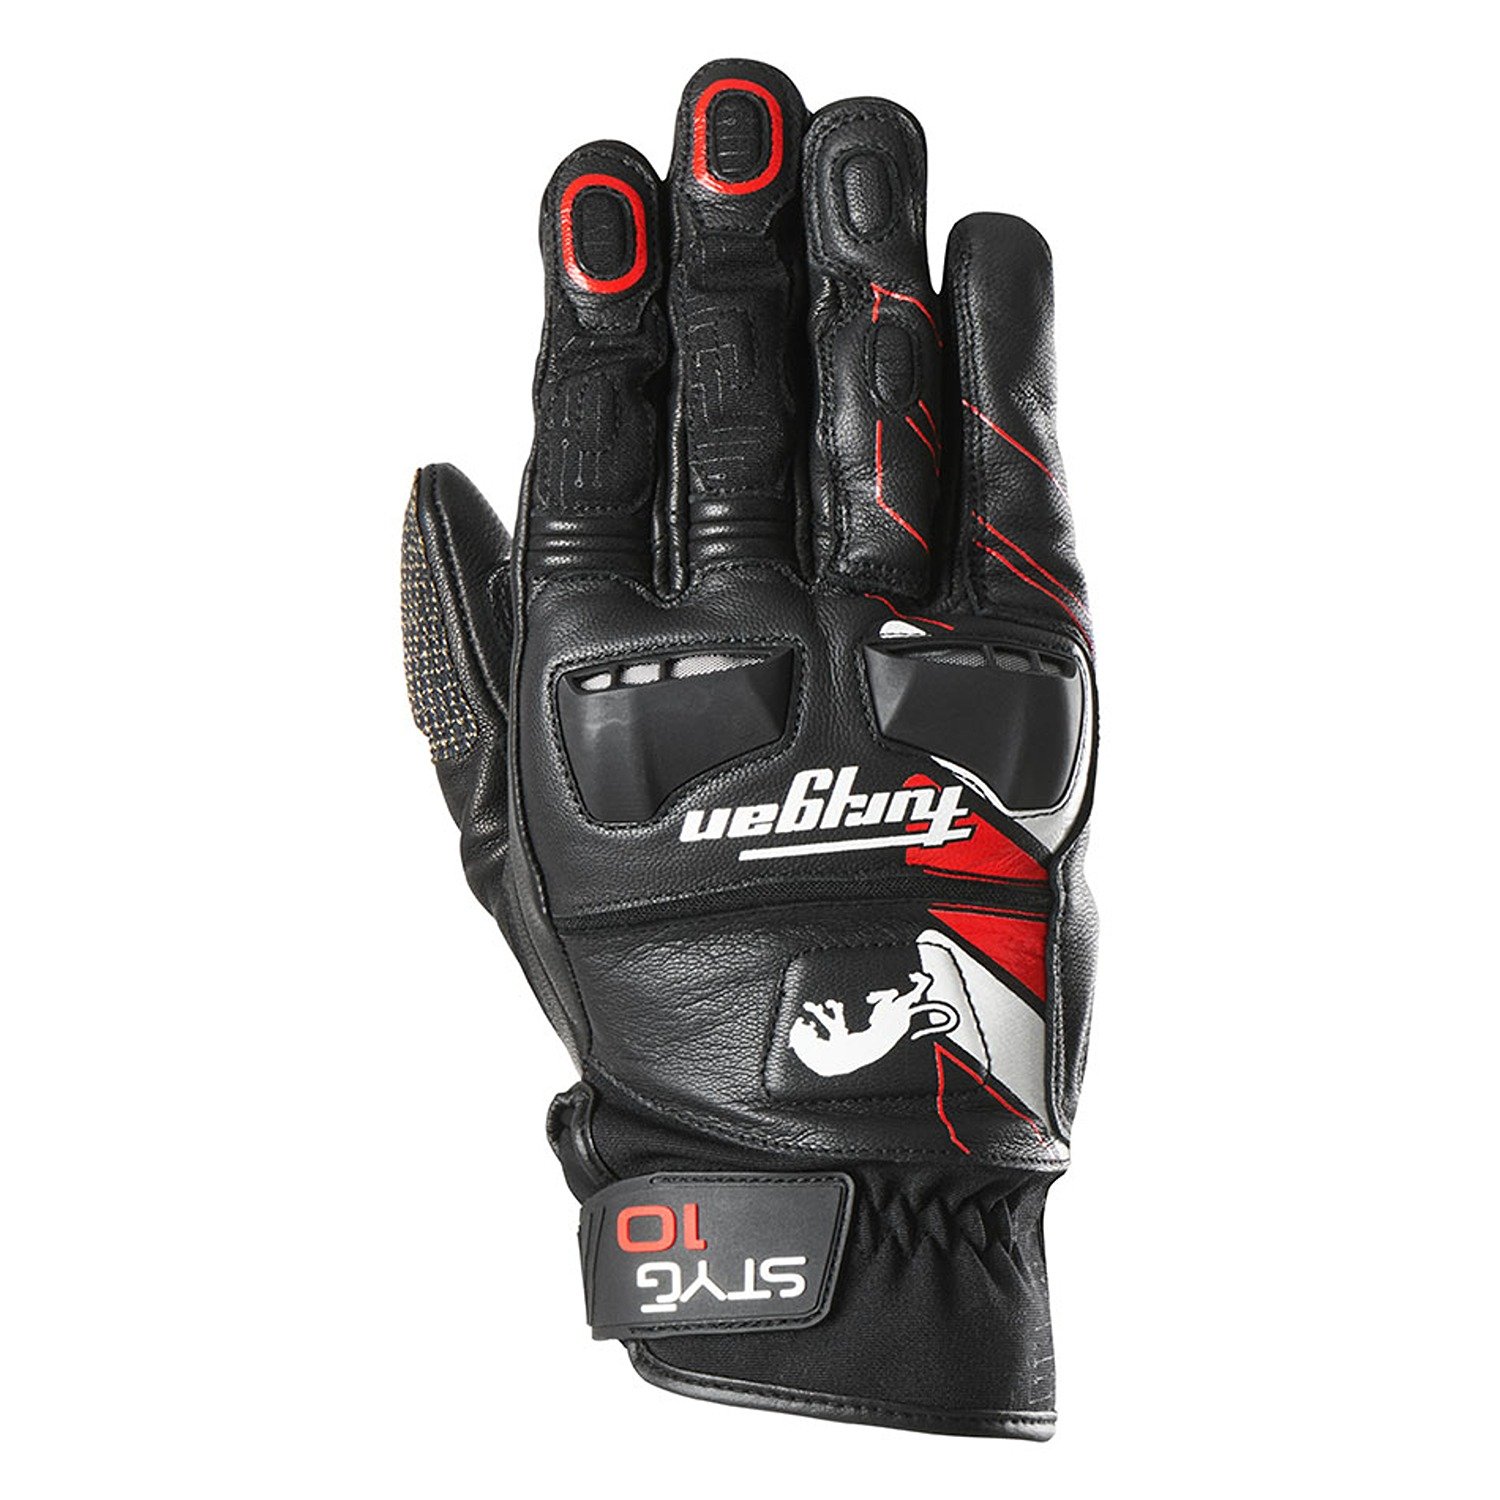 Image of Furygan Styg10 Gloves Black White Red Size S ID 3435980385026